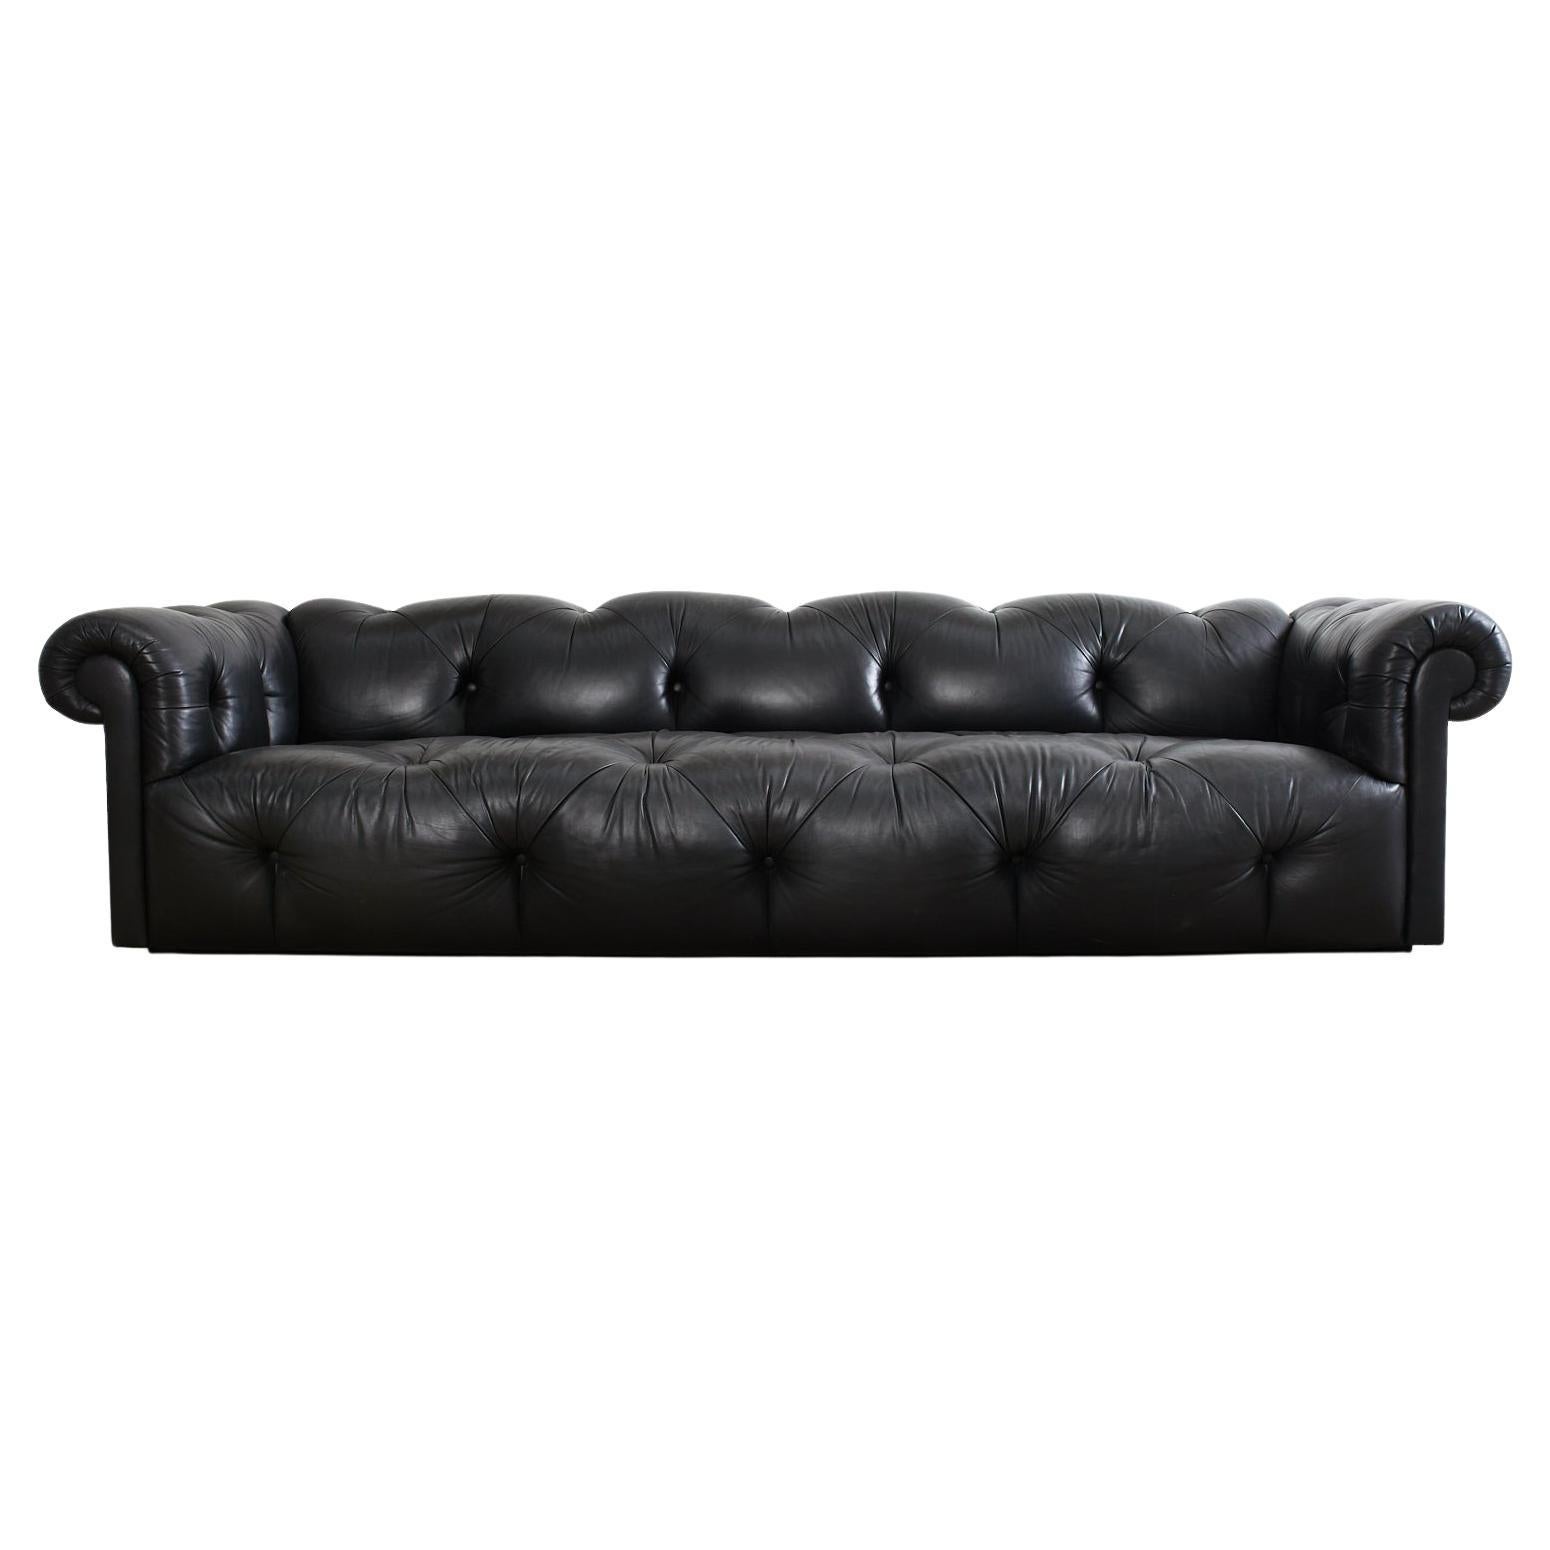 Sally Sirkin Lewis Black Leather Chesterfield Tufted Sofa